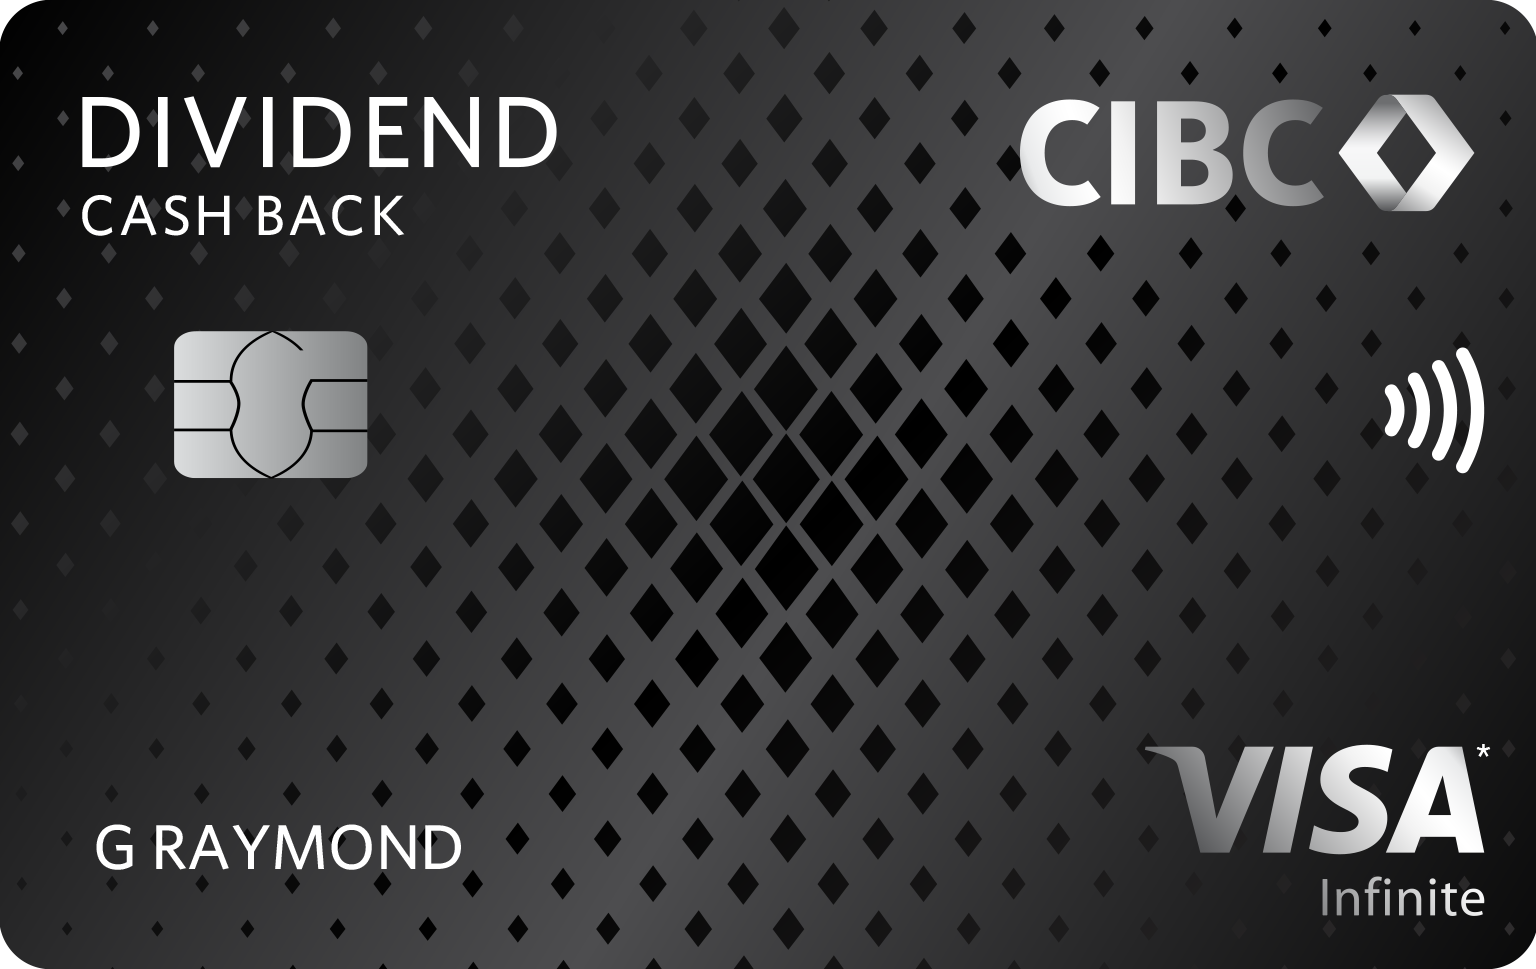 CIBC Dividend Visa Infinite Card | $250 Cash Back | Milesopedia